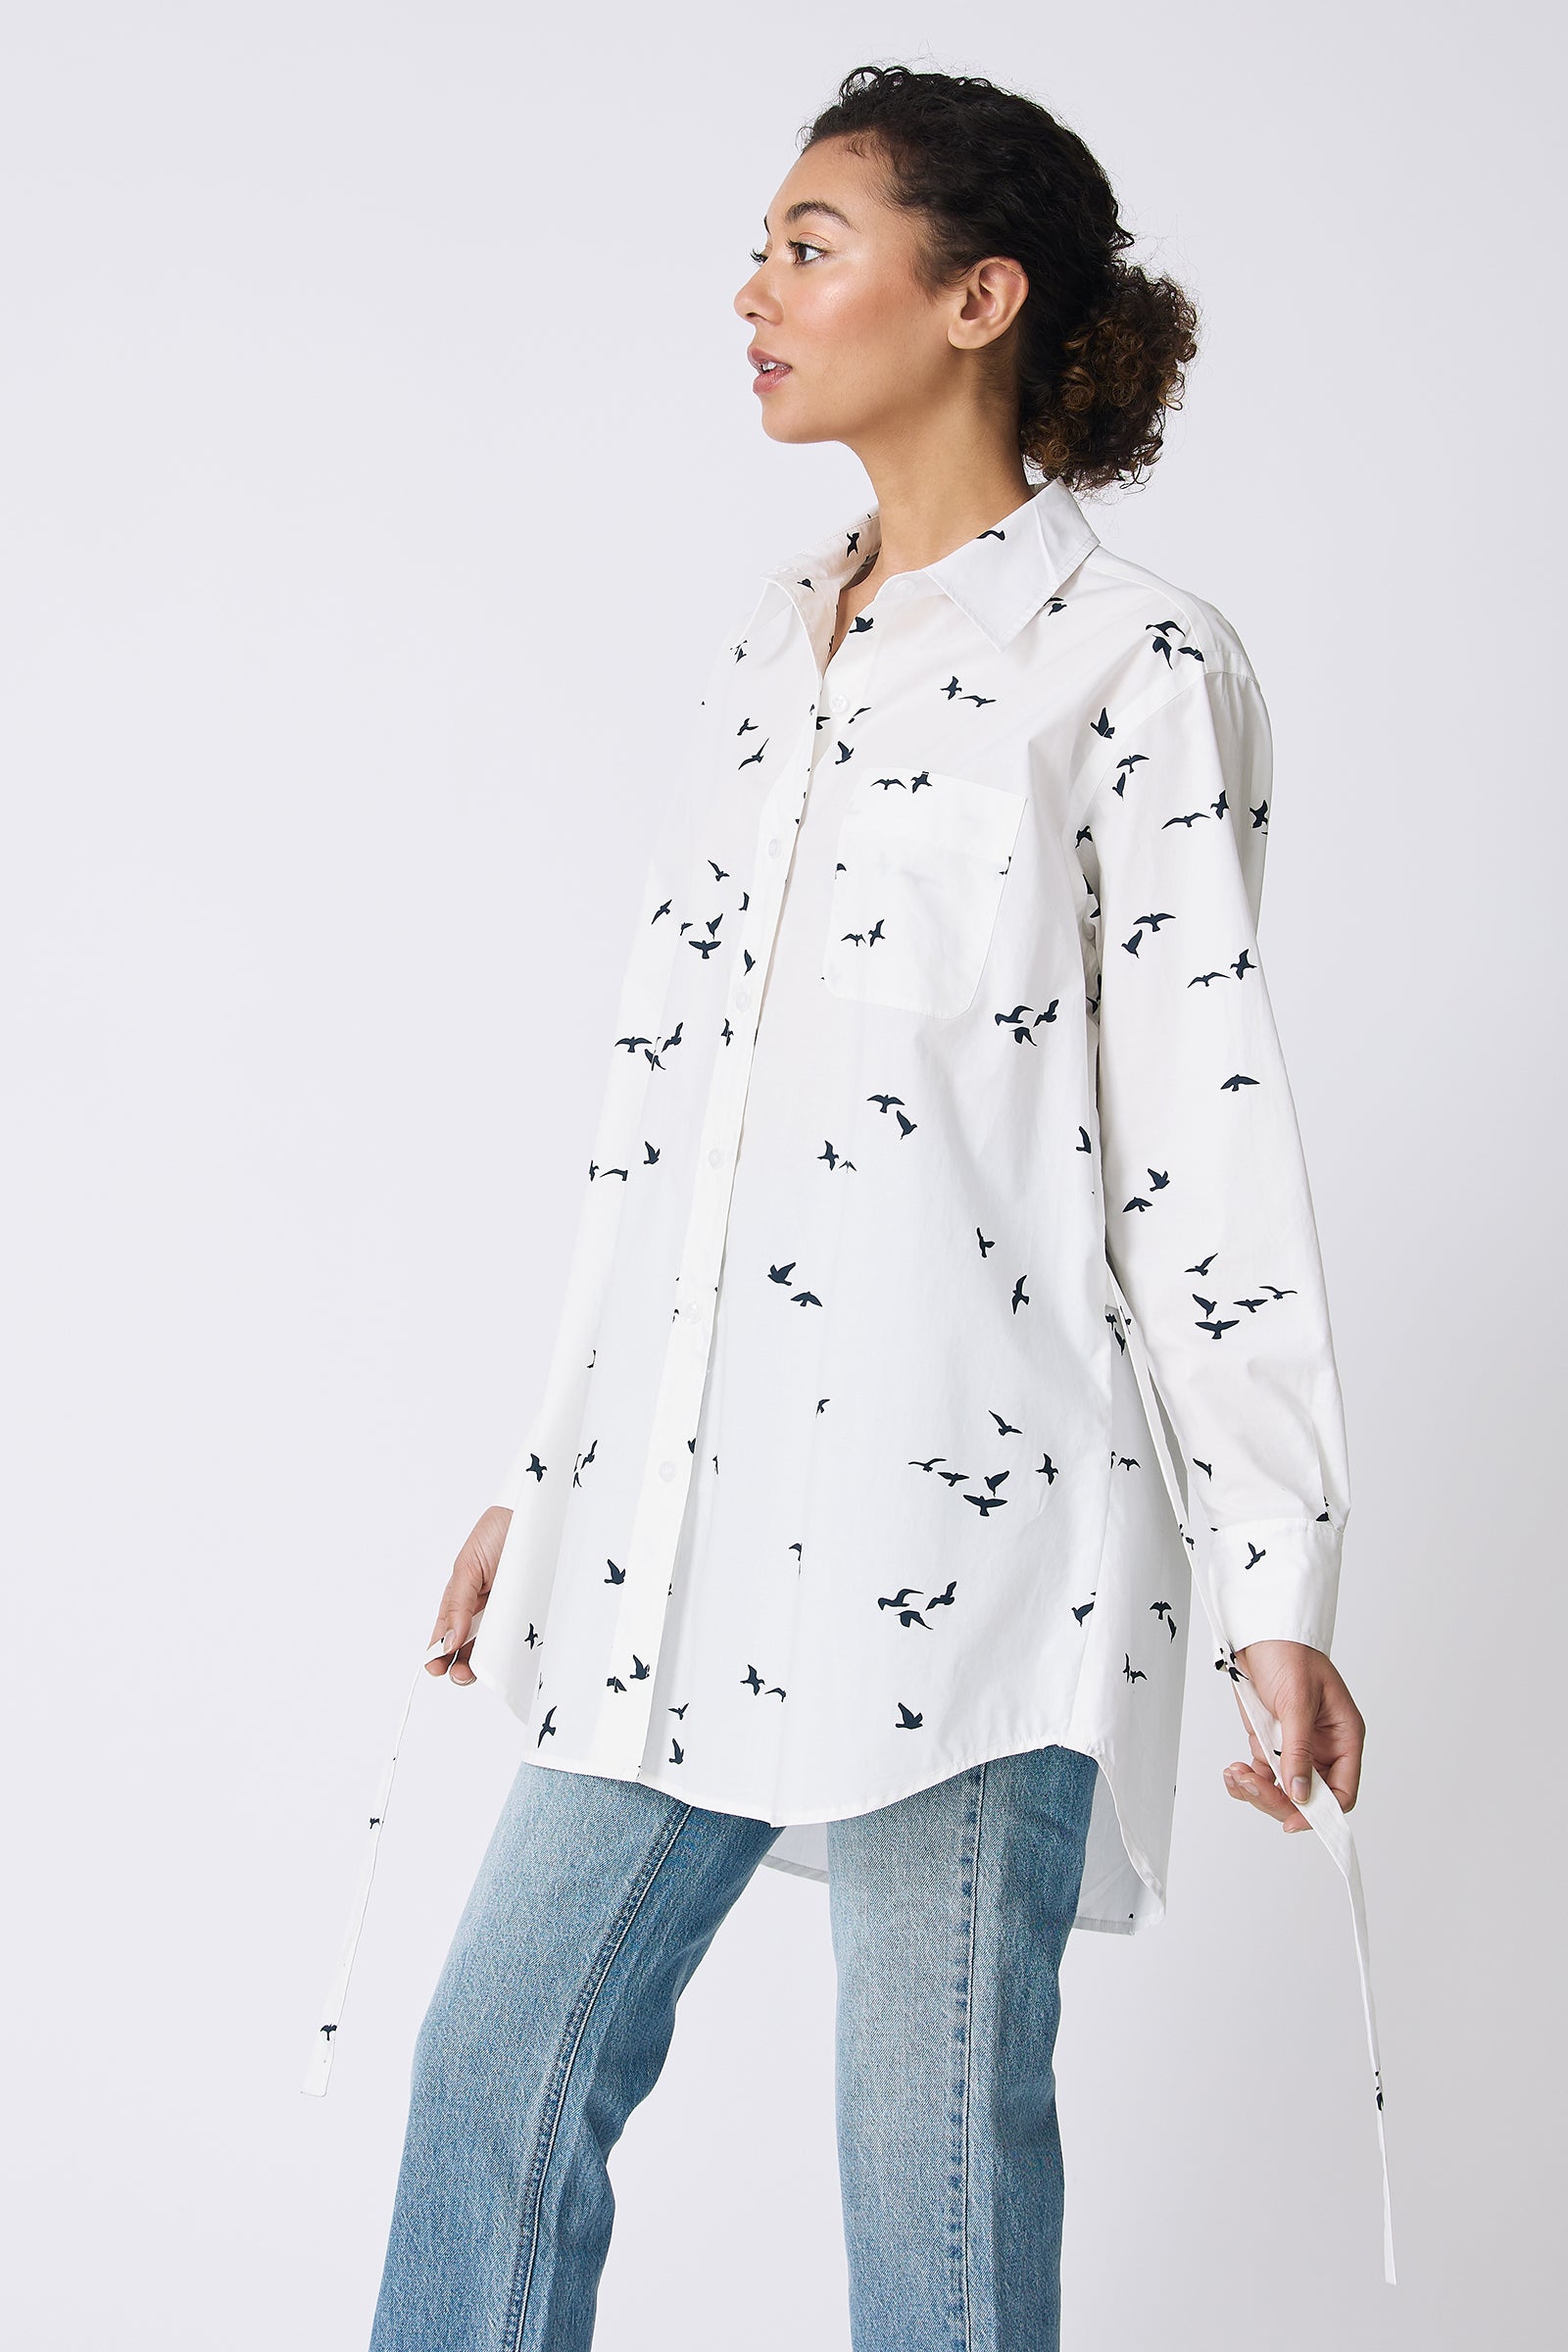 Kal Rieman Deanna Shirt in White Bird Print on model side view